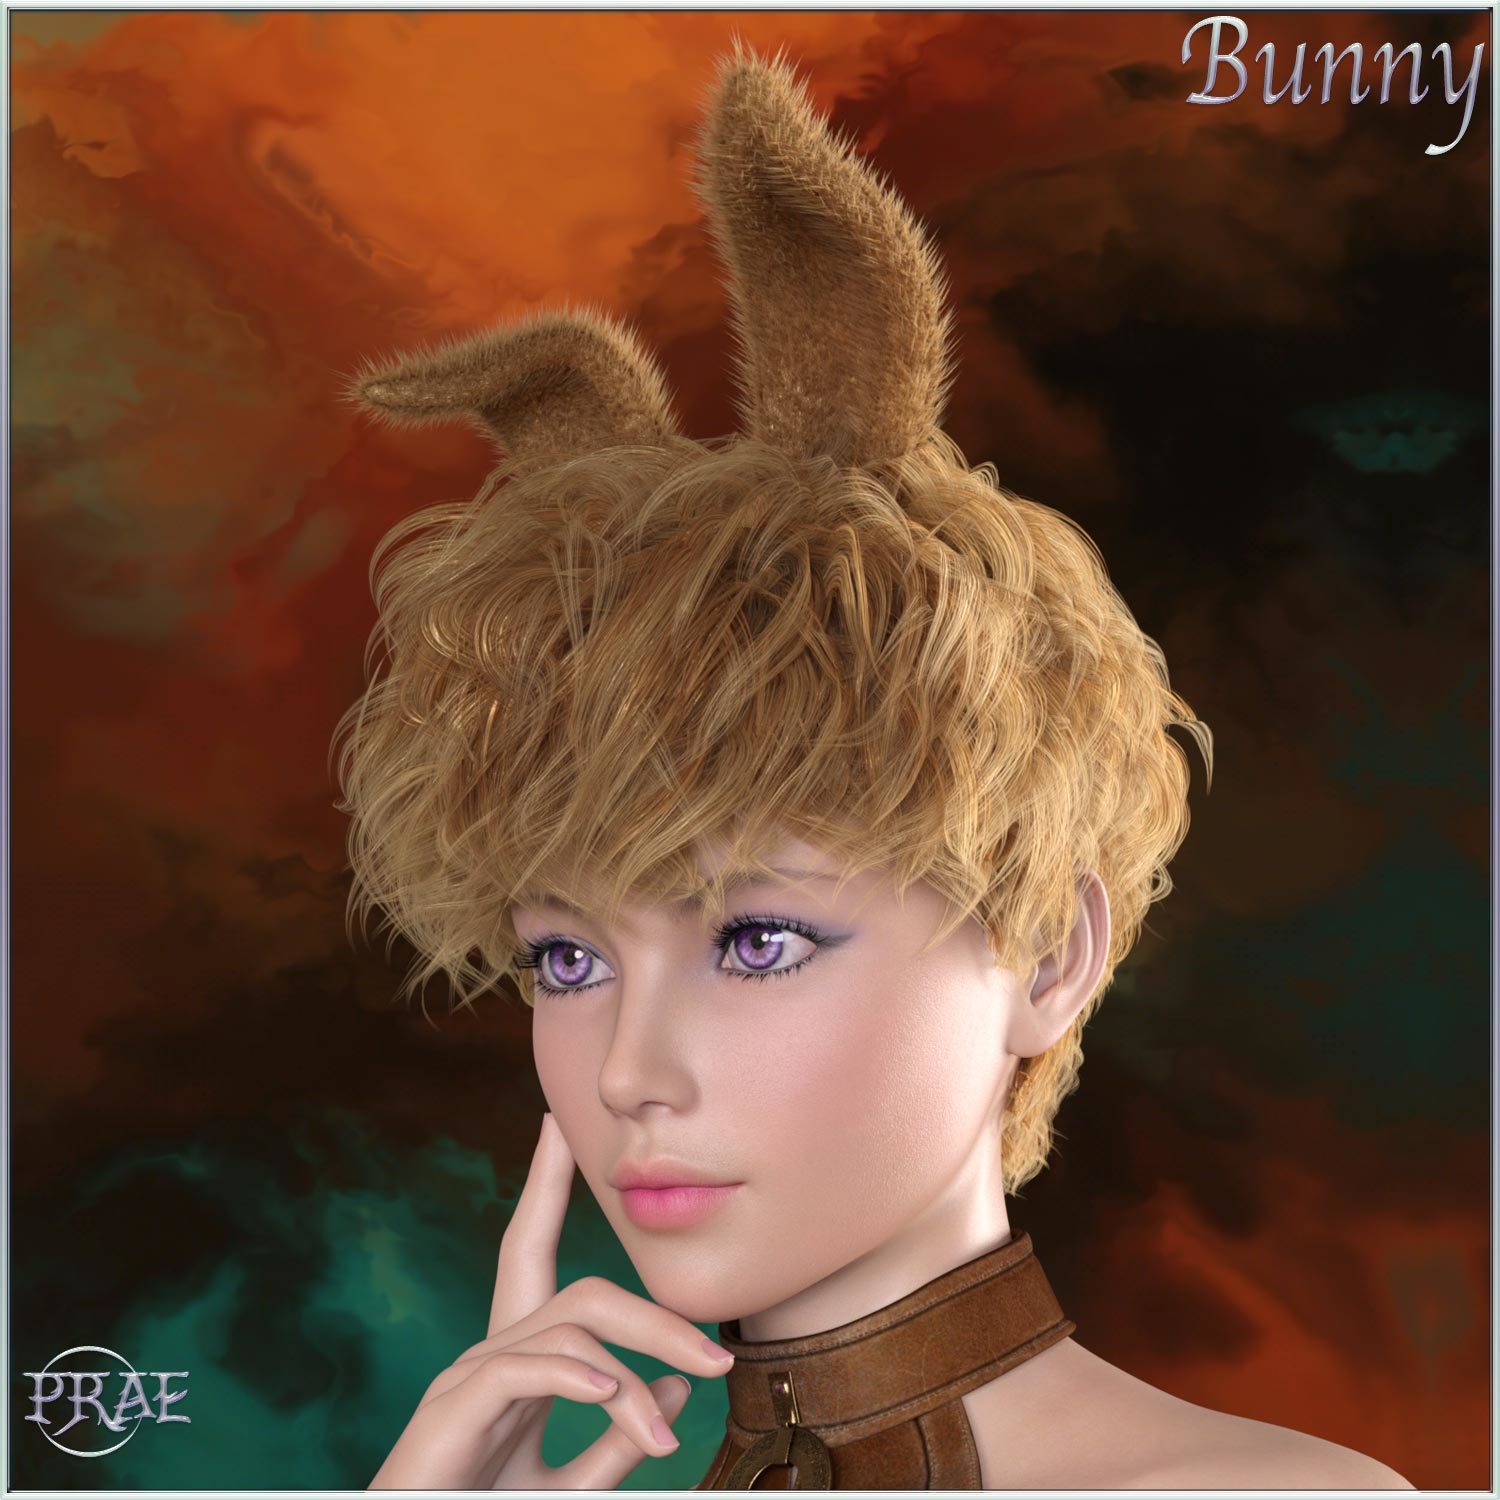 Prae-Bunny For G8 Daz_DAZ3D下载站